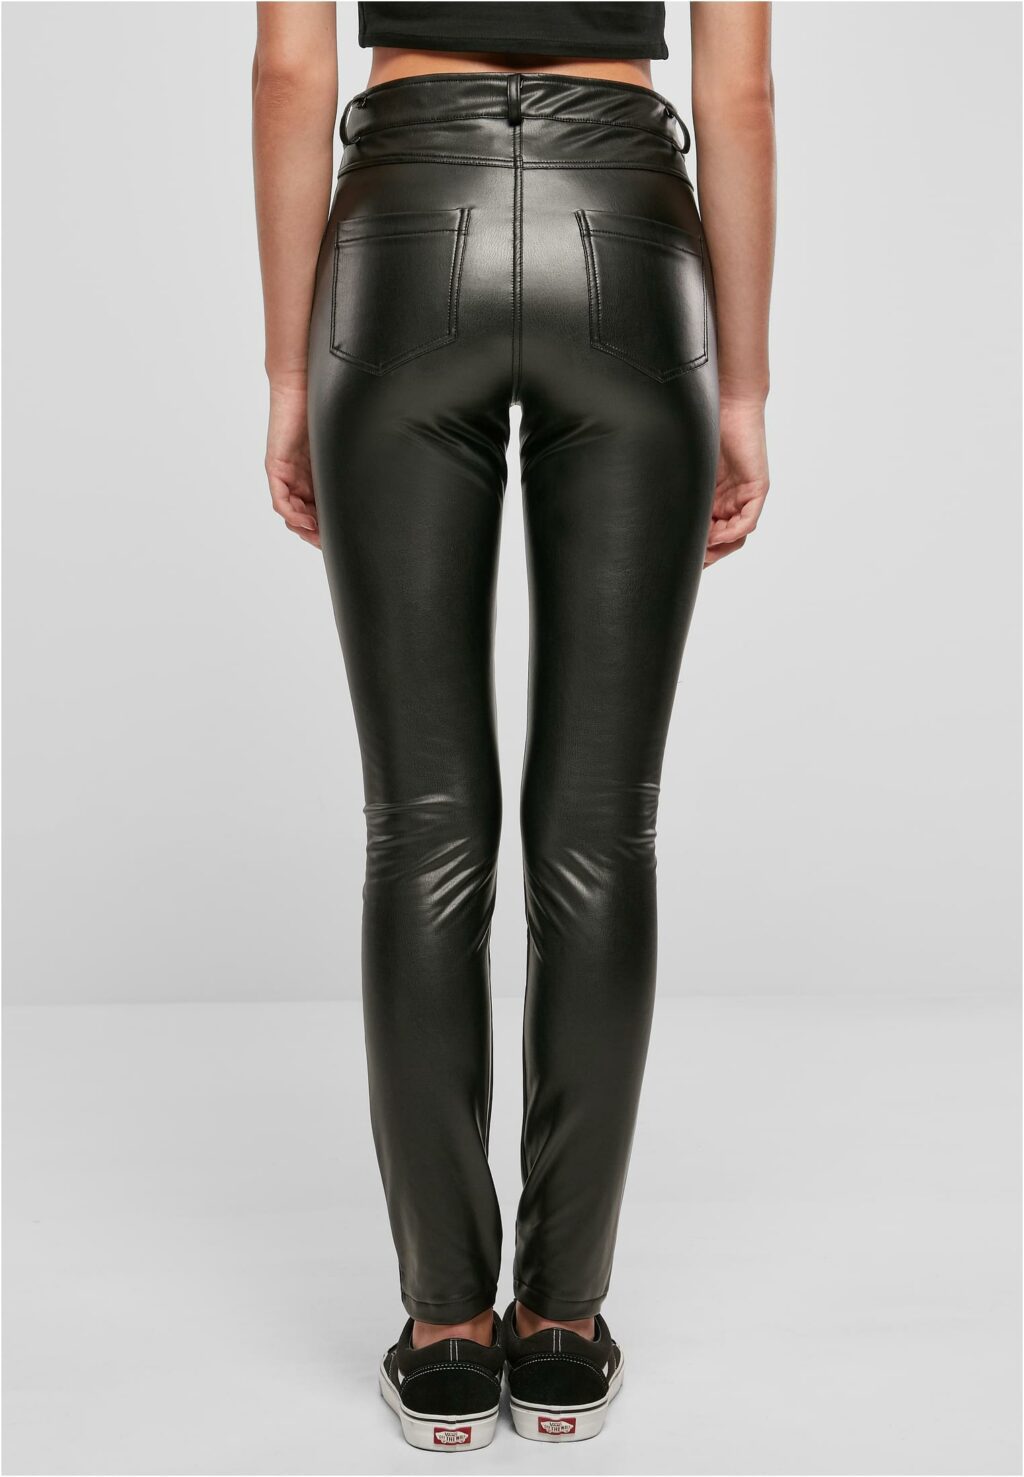 Urban Classics Ladies Mid Waist Synthetic Leather Pants black TB5455